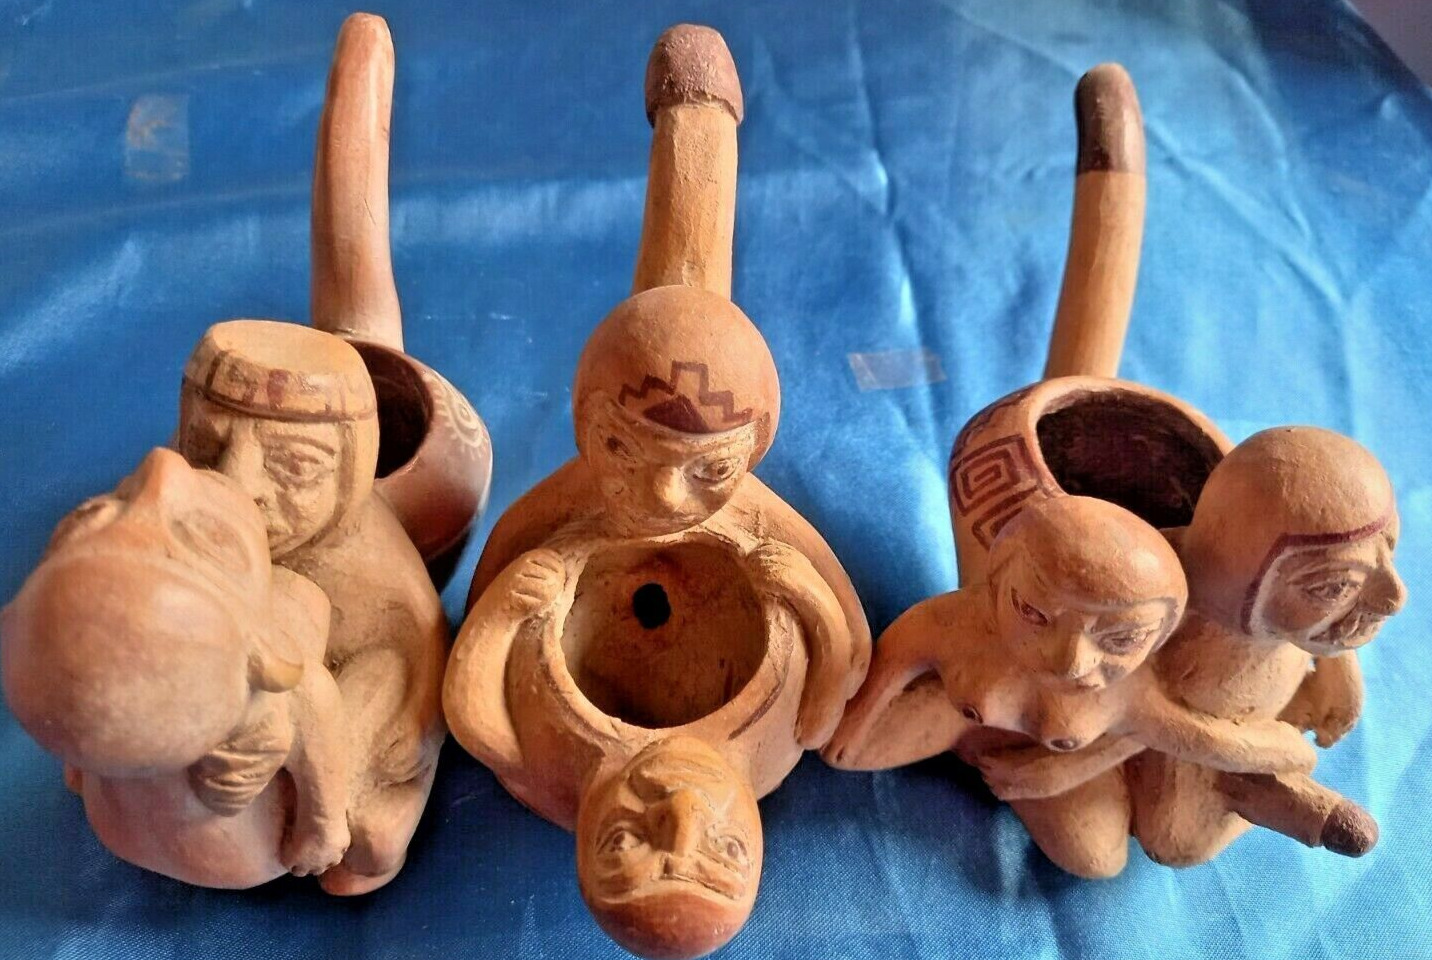 3 Peruvian erotic pipes sexuality reproduction pre-Columbian ceramic